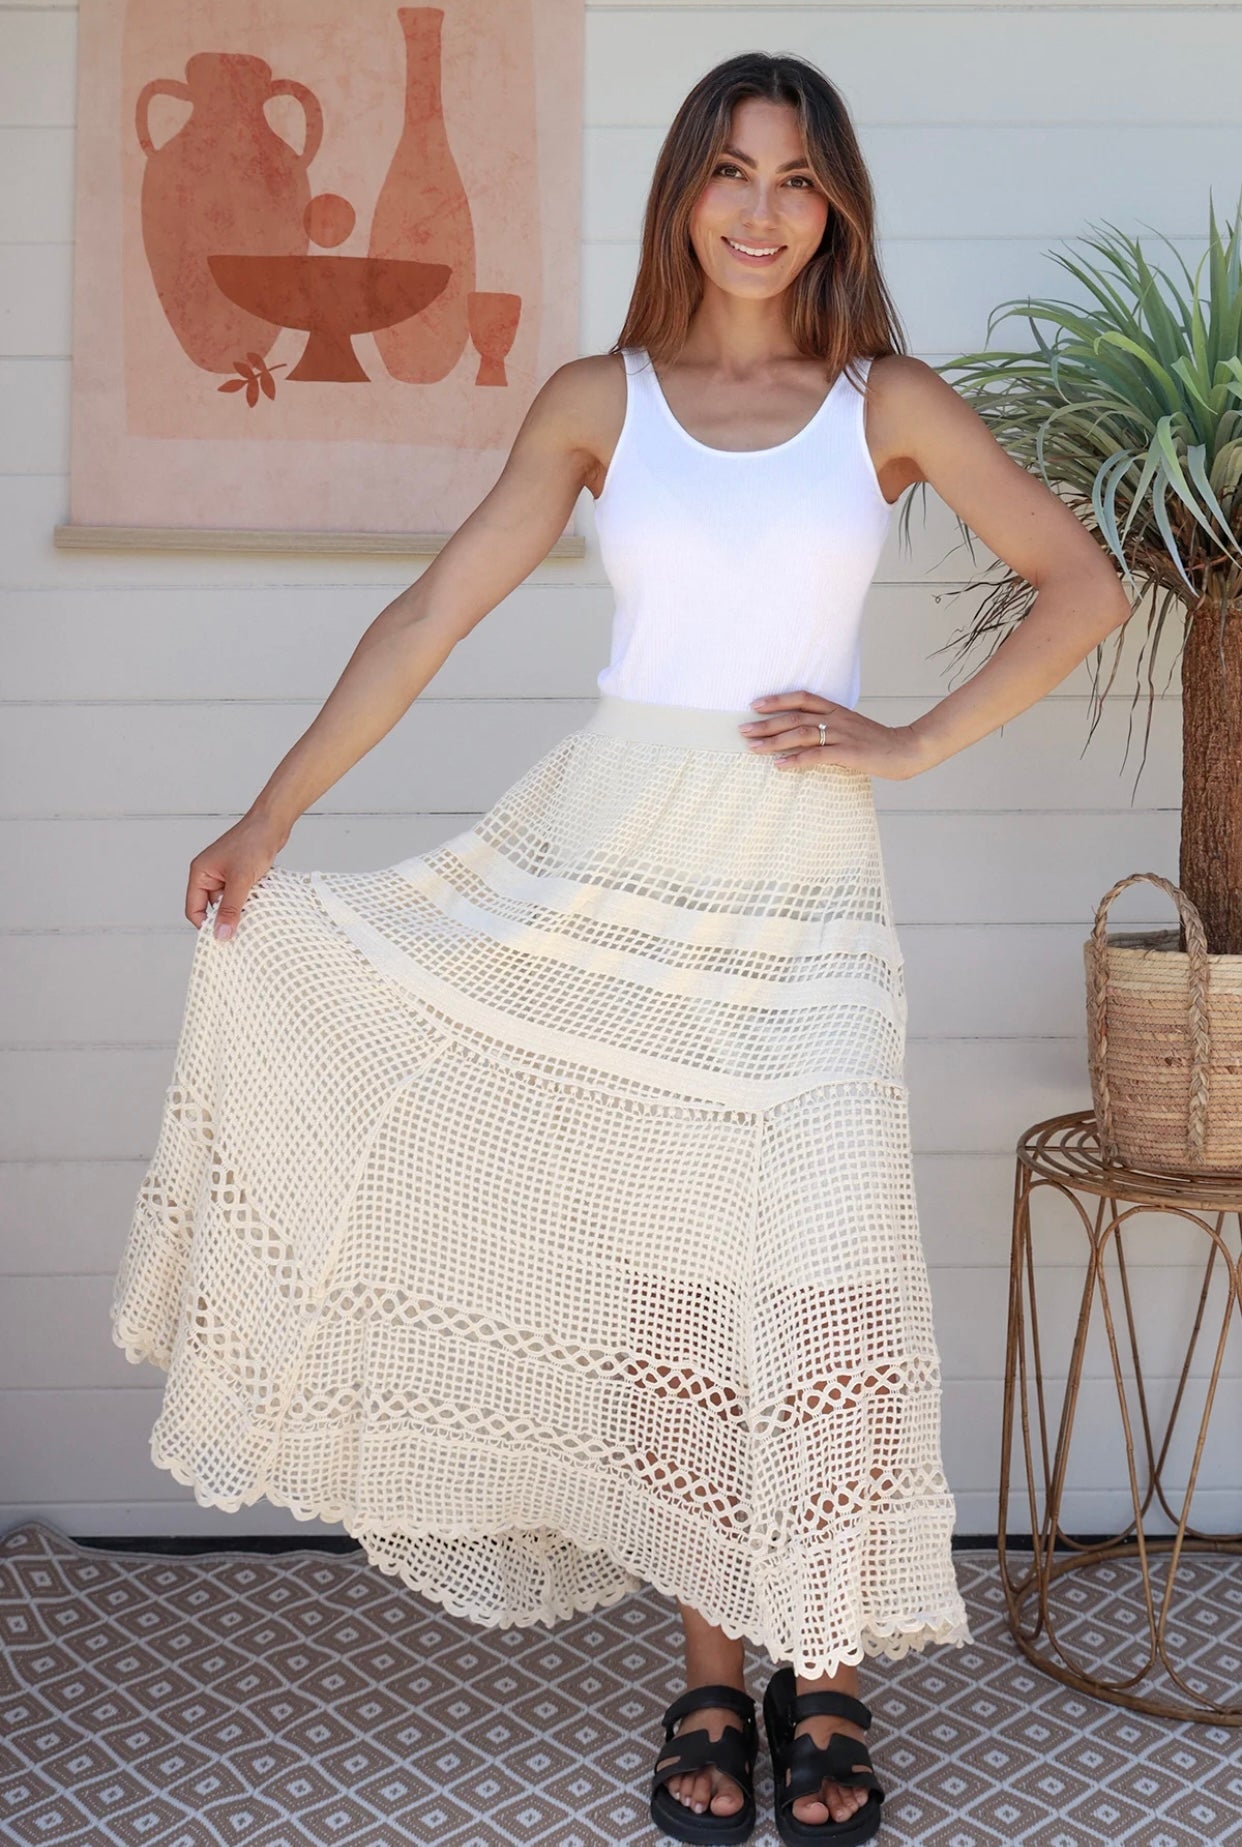 Lilly Design Maxi Skirt cream-beige crochet lace cotton